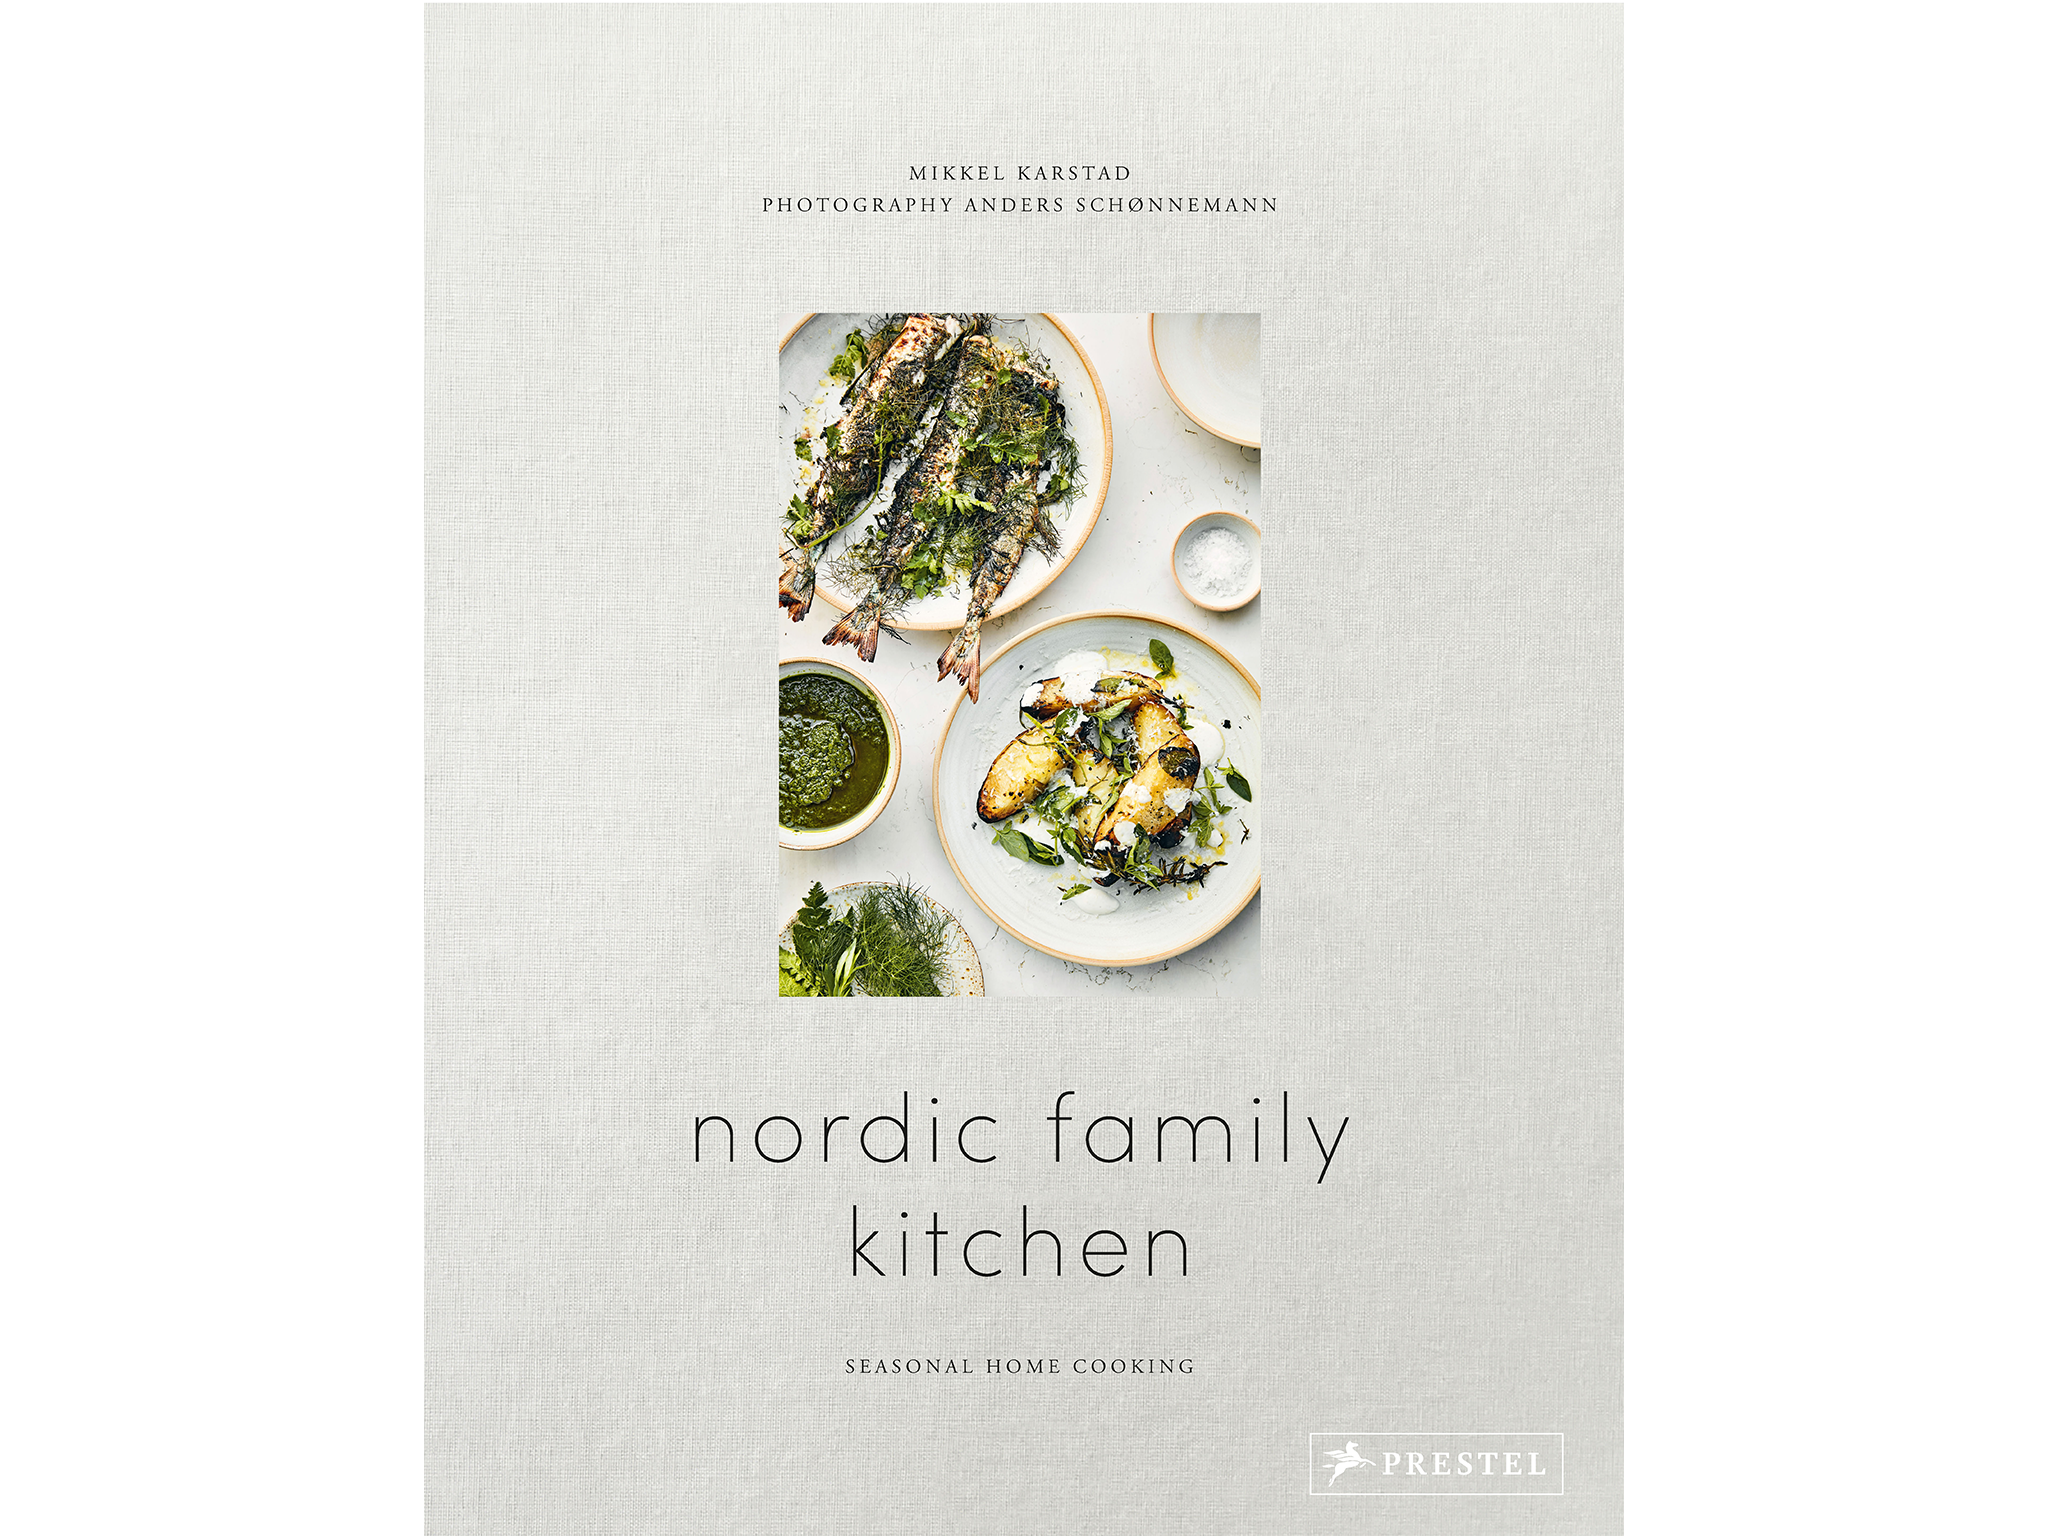 ‘NORDIC FAMILY KITCHEN’ BY MIKKEL KARSTAD, PUBLISHED BY PRESTEL